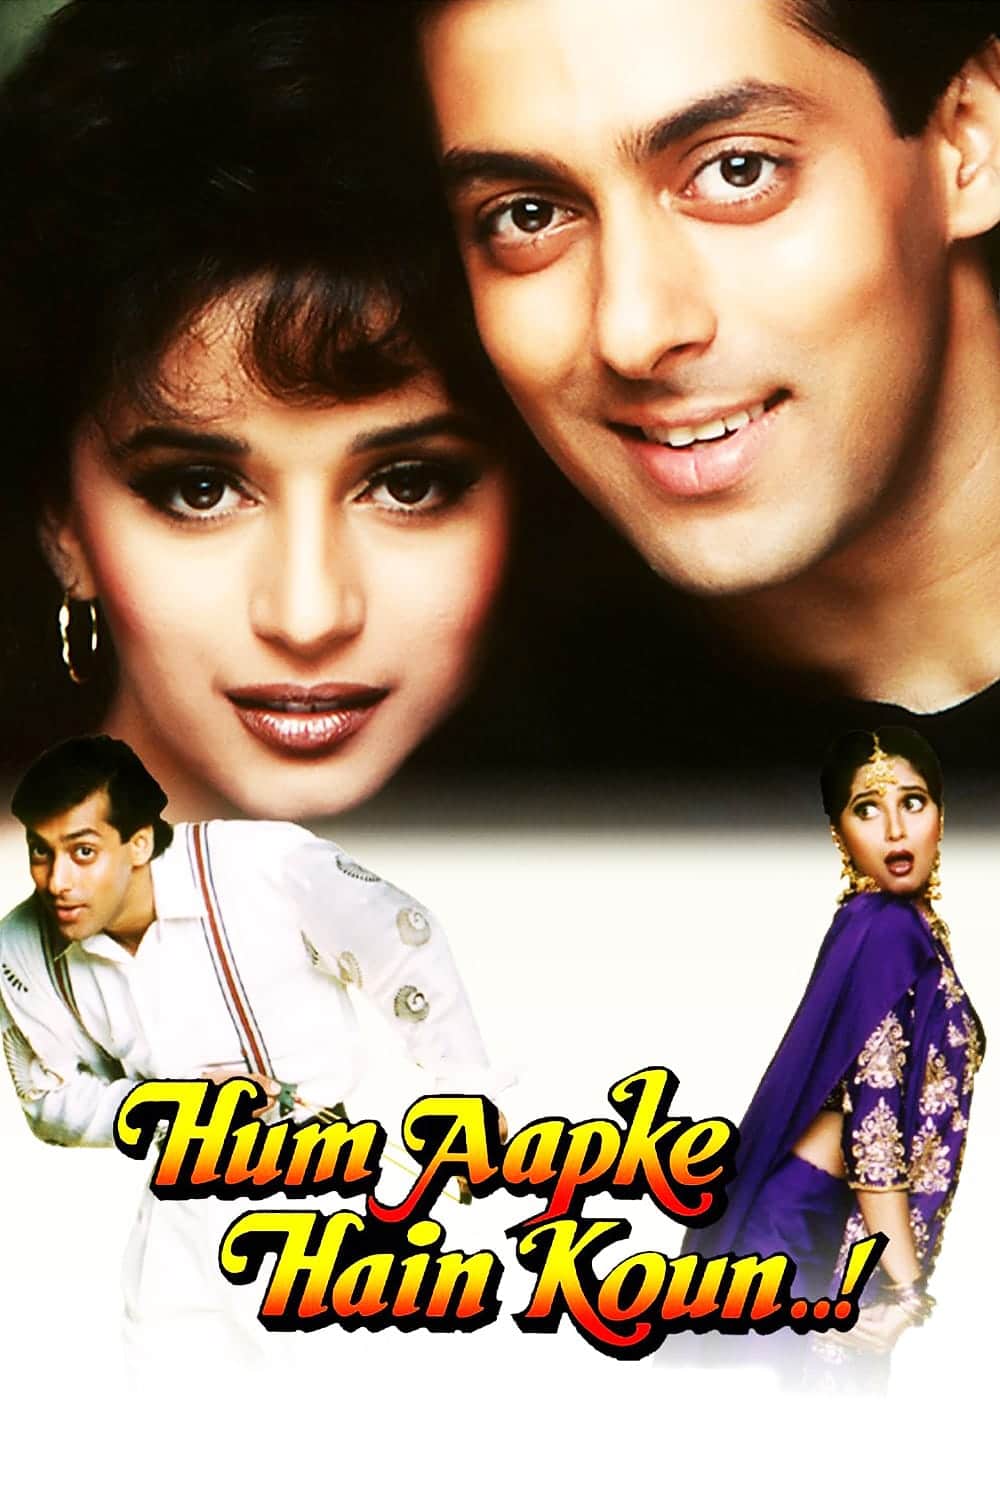 Poster for the movie "Hum Aapke Hain Koun..!"